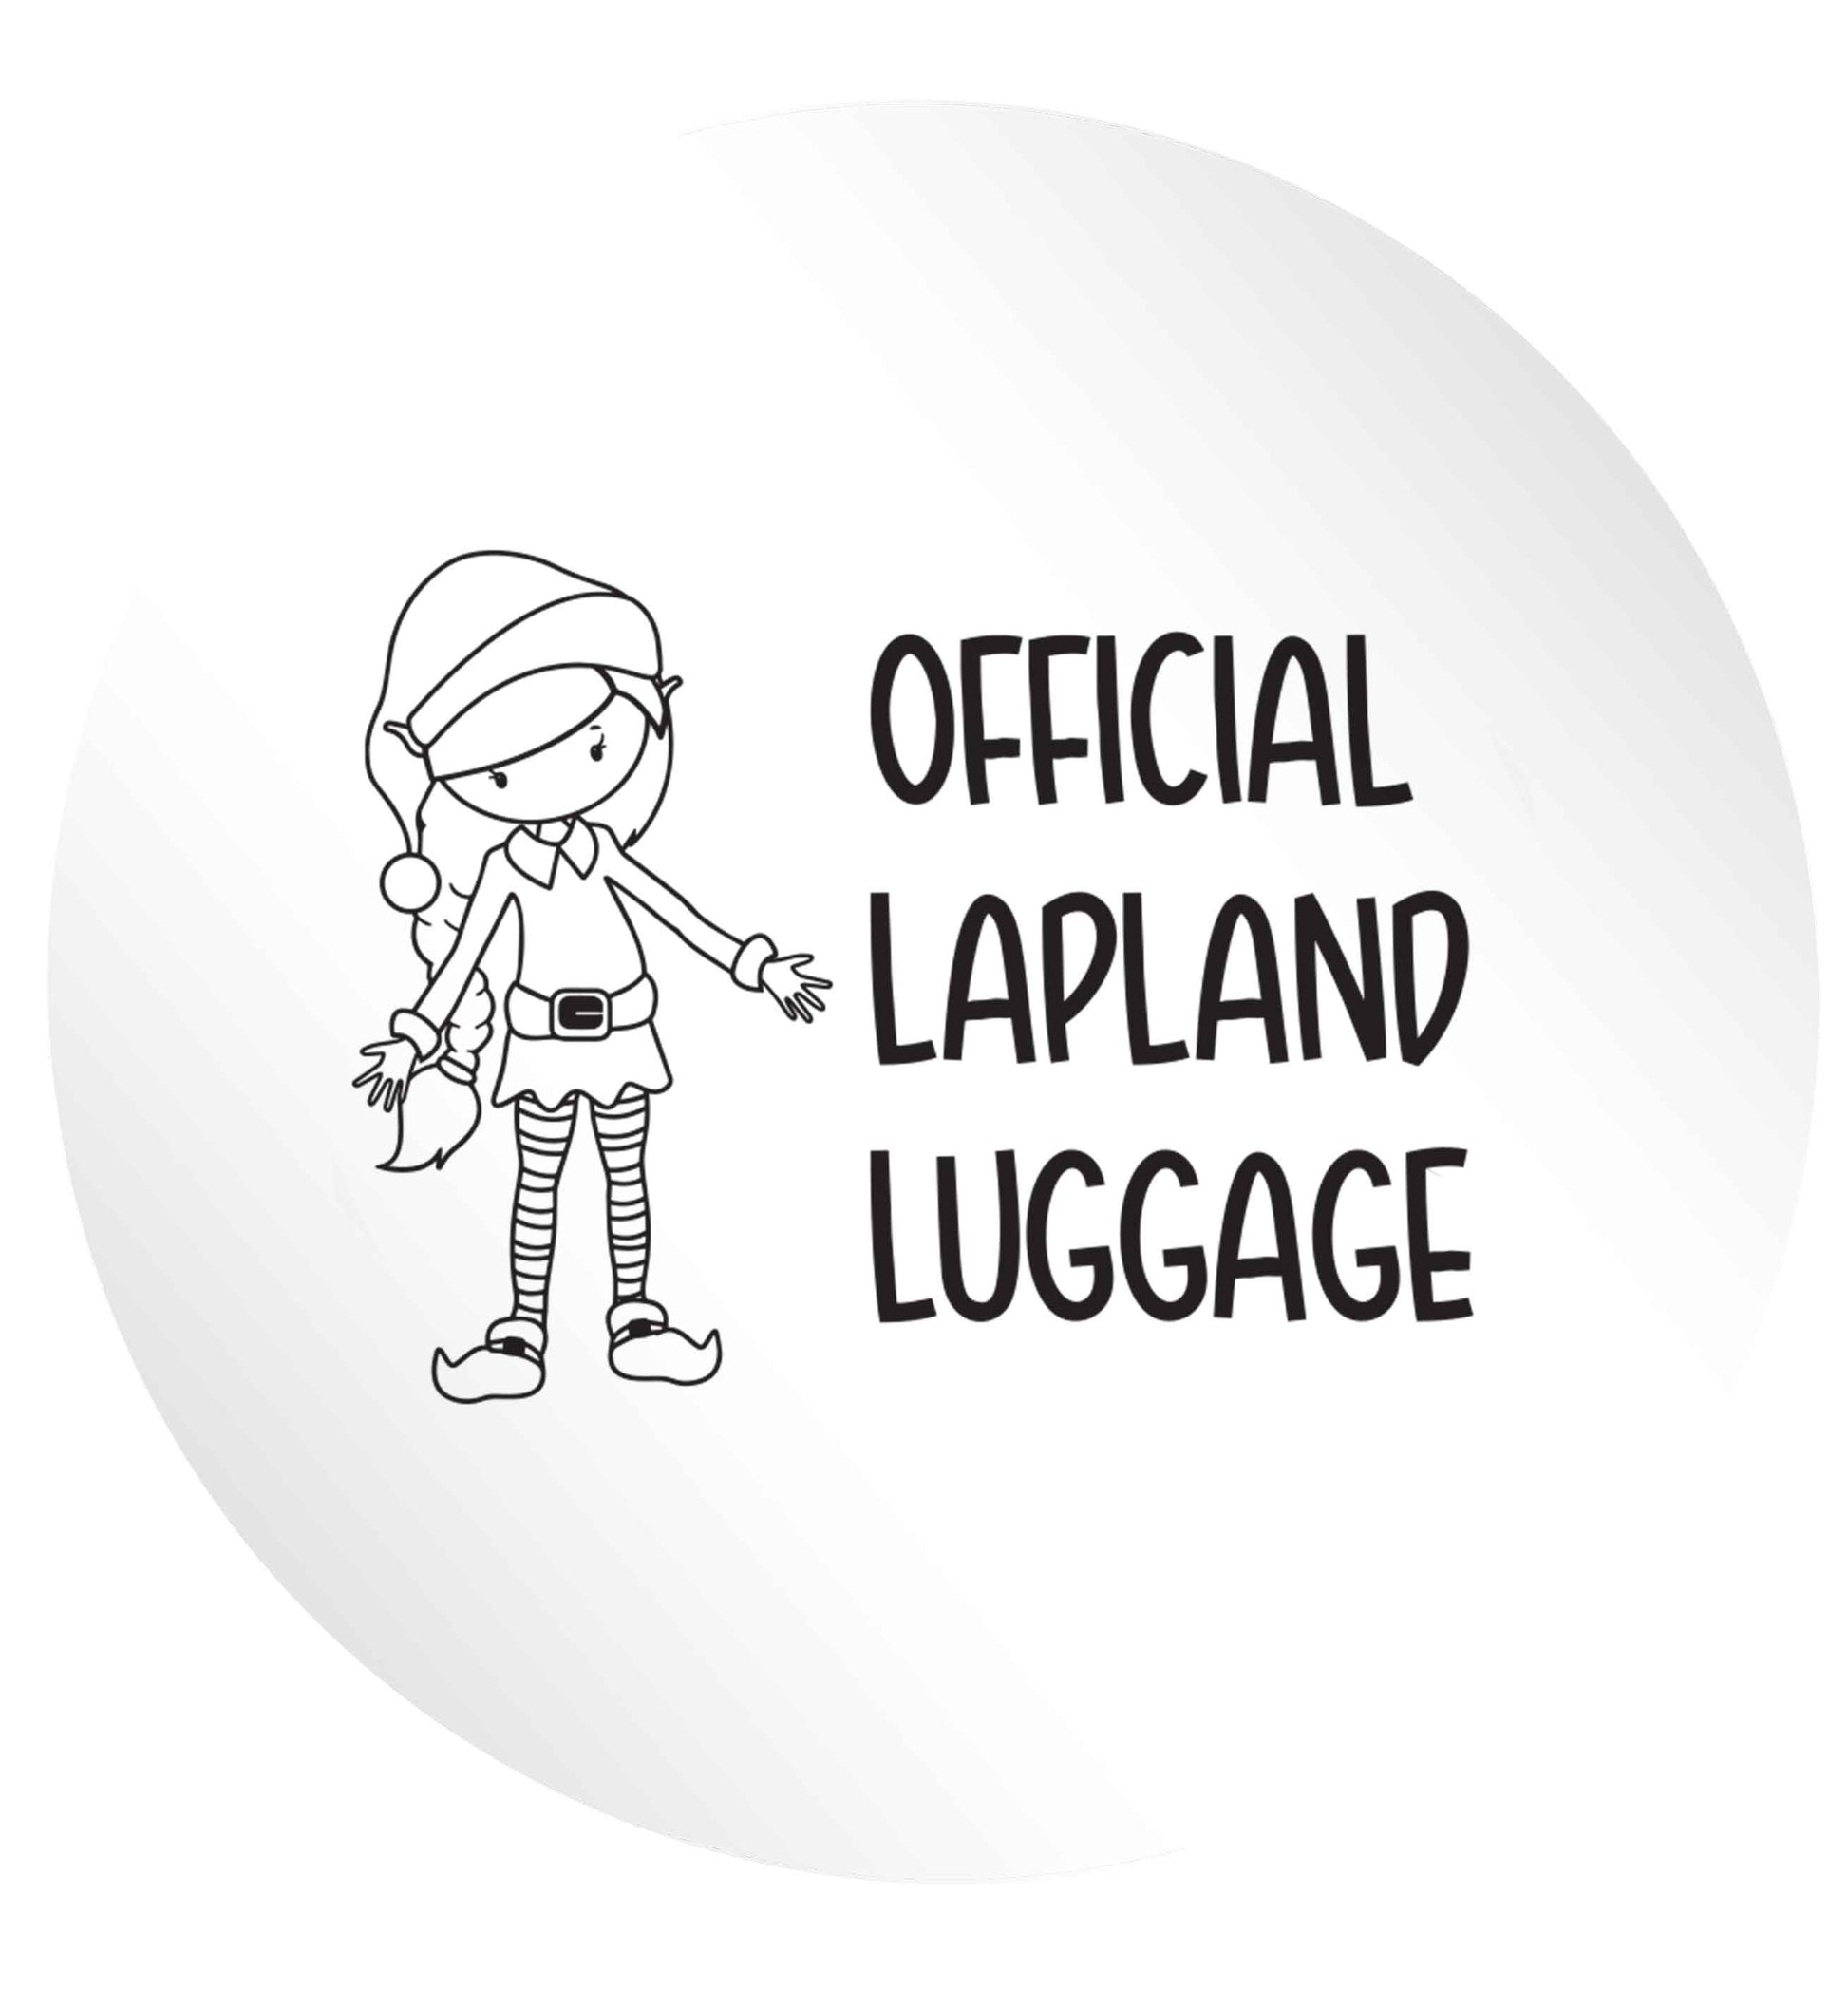 Official lapland luggage - Elf snowflake 24 @ 45mm matt circle stickers